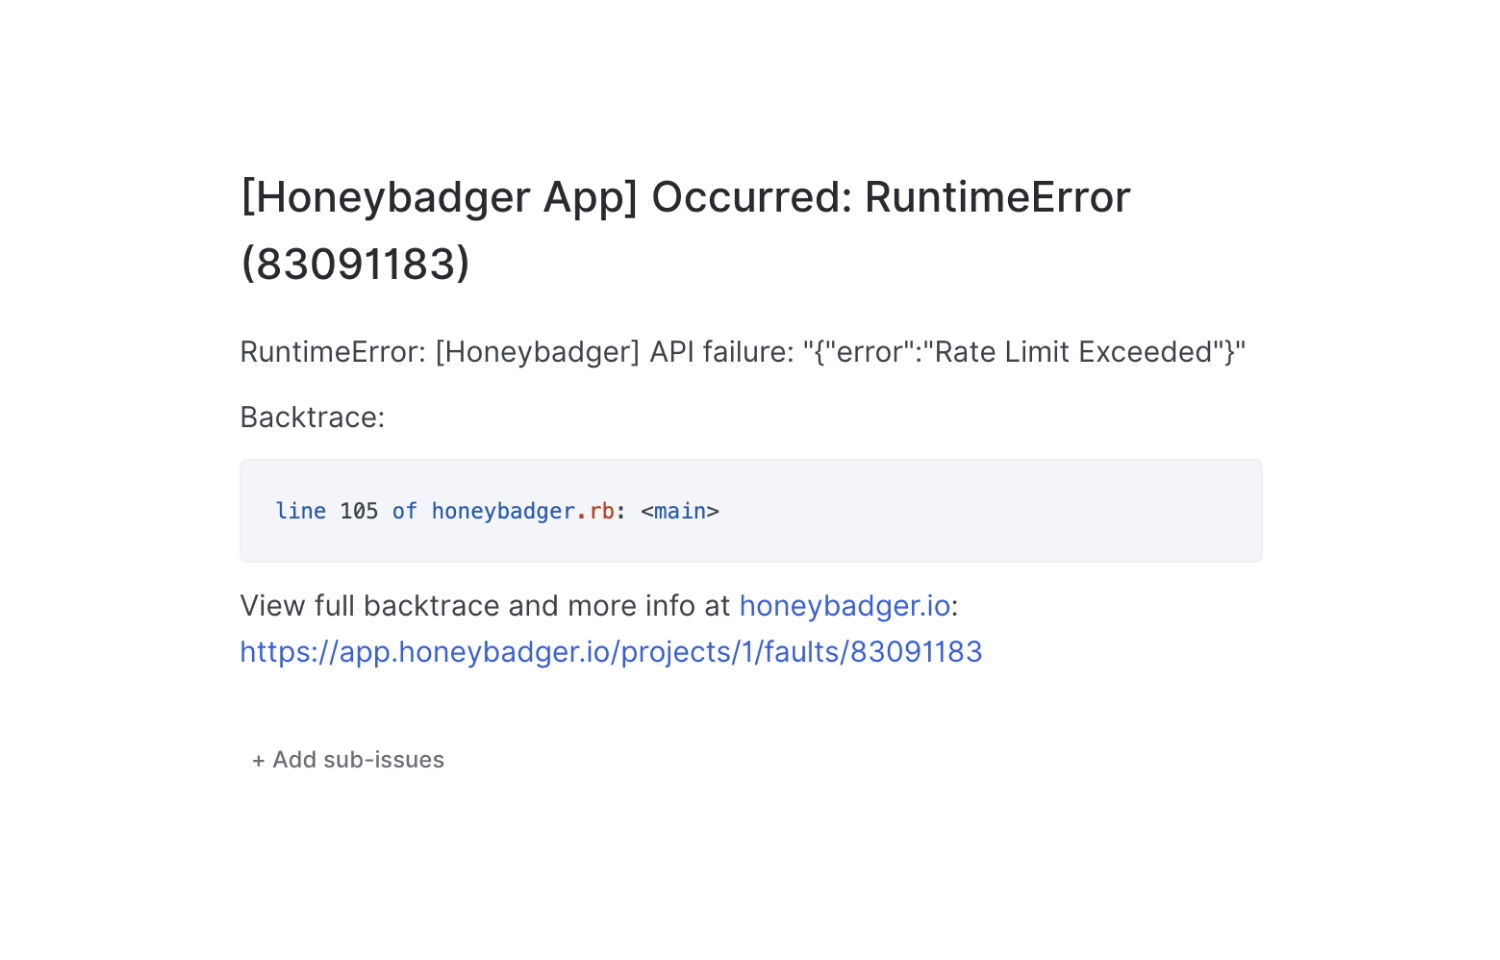 A Linear ticket for a Honeybadger error titled "RuntimError".